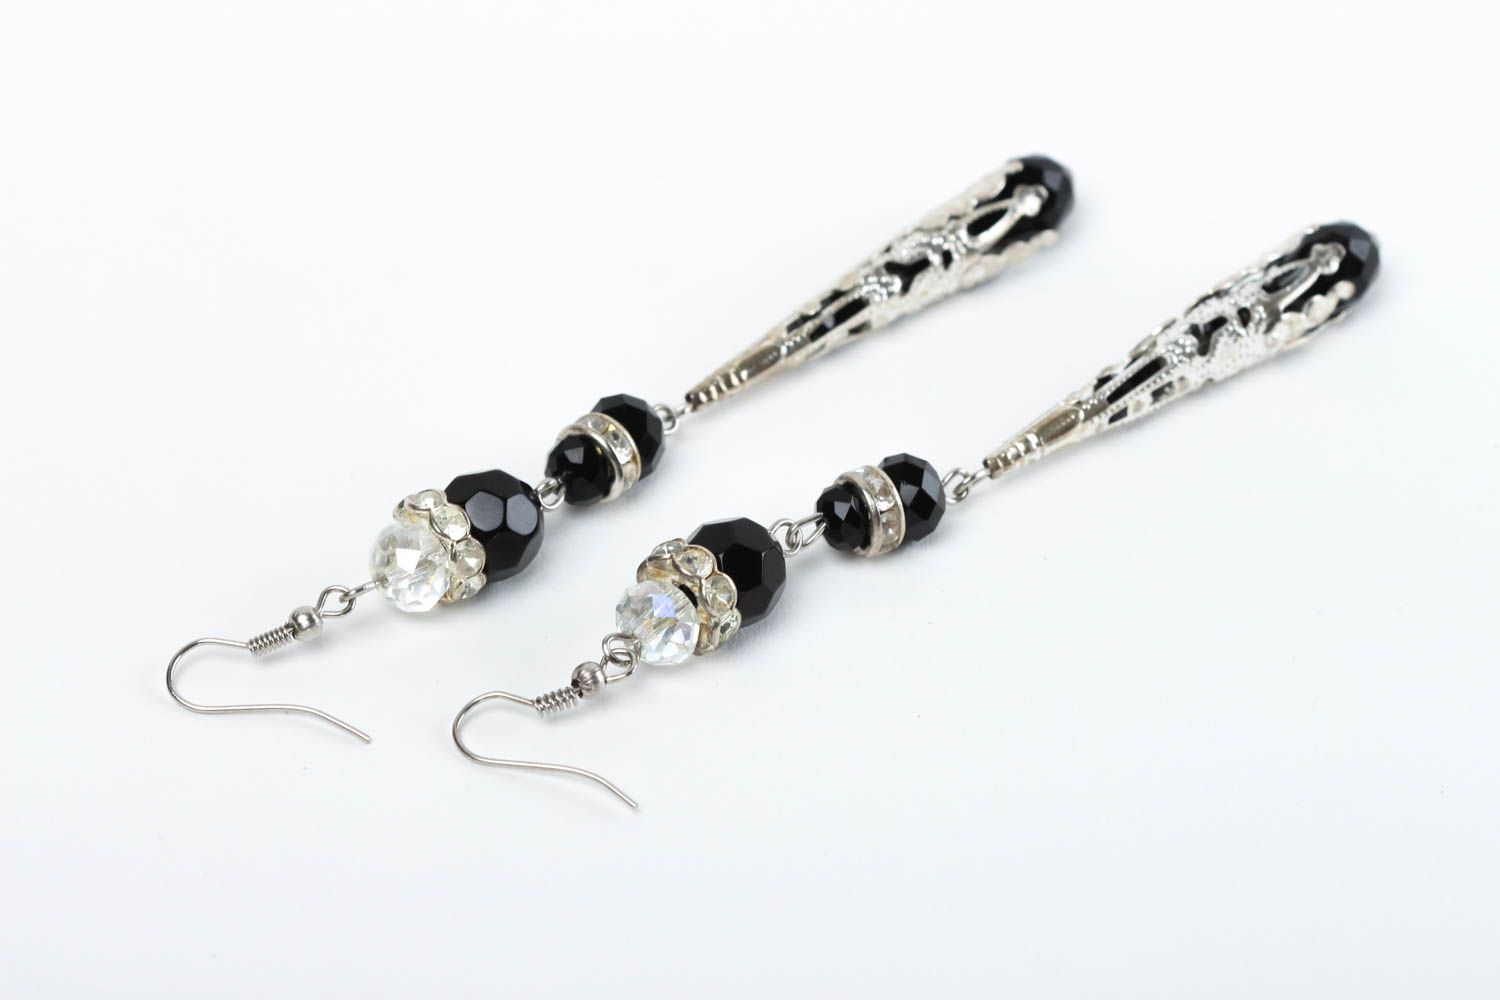 Handmade jewelry designer accessory unusual earrings for girls gift ideas photo 4